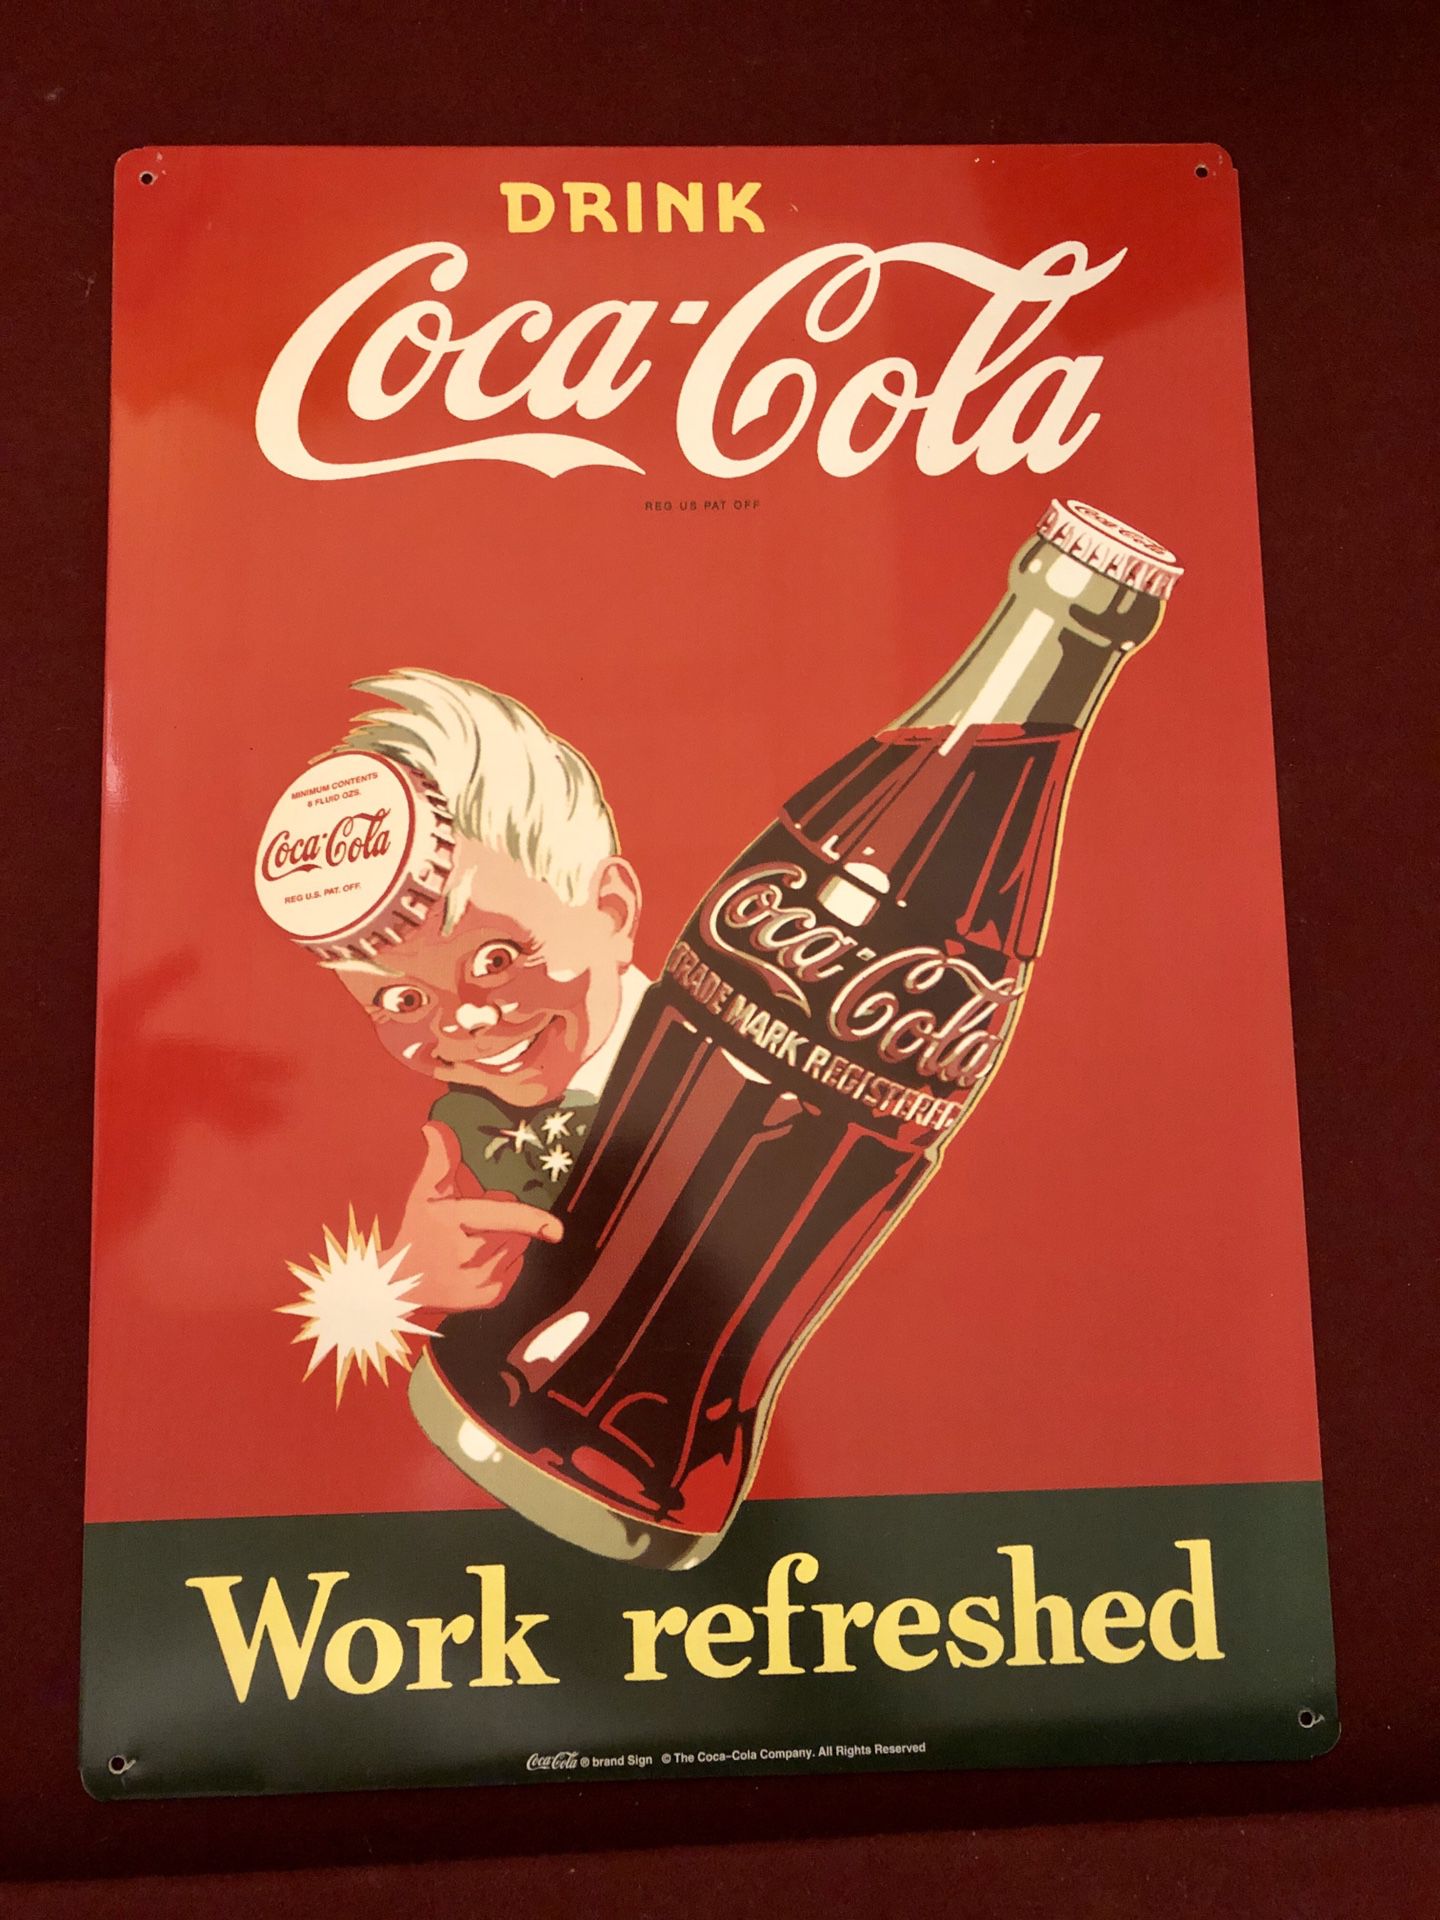 Metal Coca Cola sign. “Drink Coca-Cola Work refreshed”